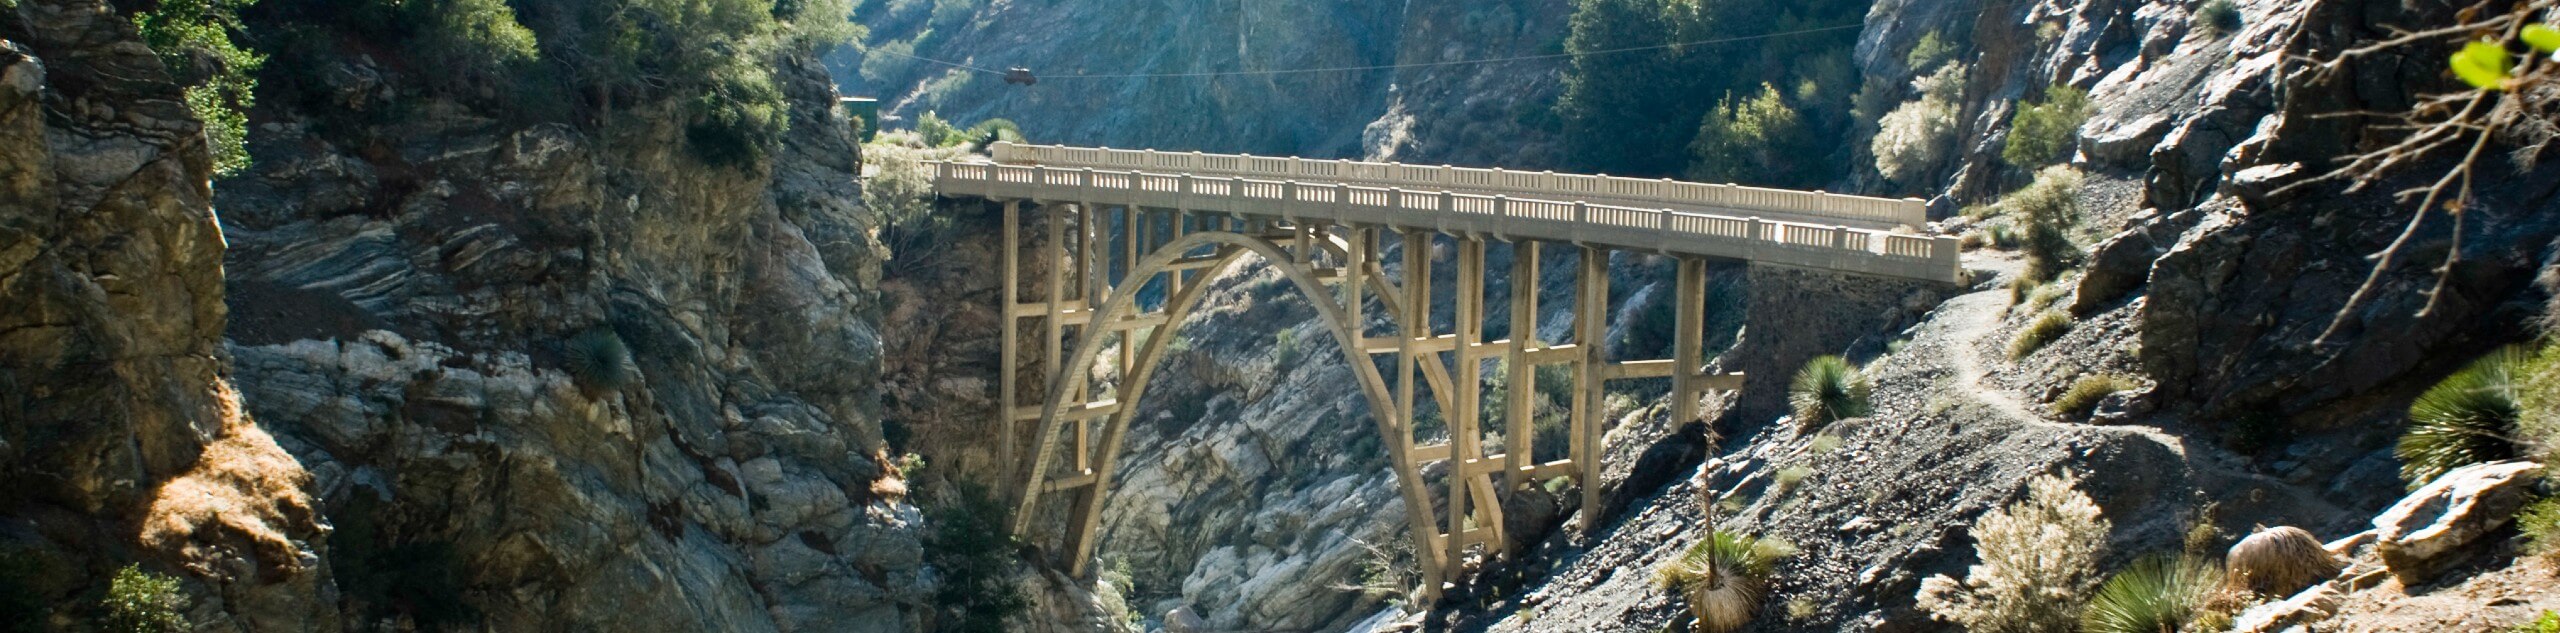 Bridge to Nowhere via East Fork Trail